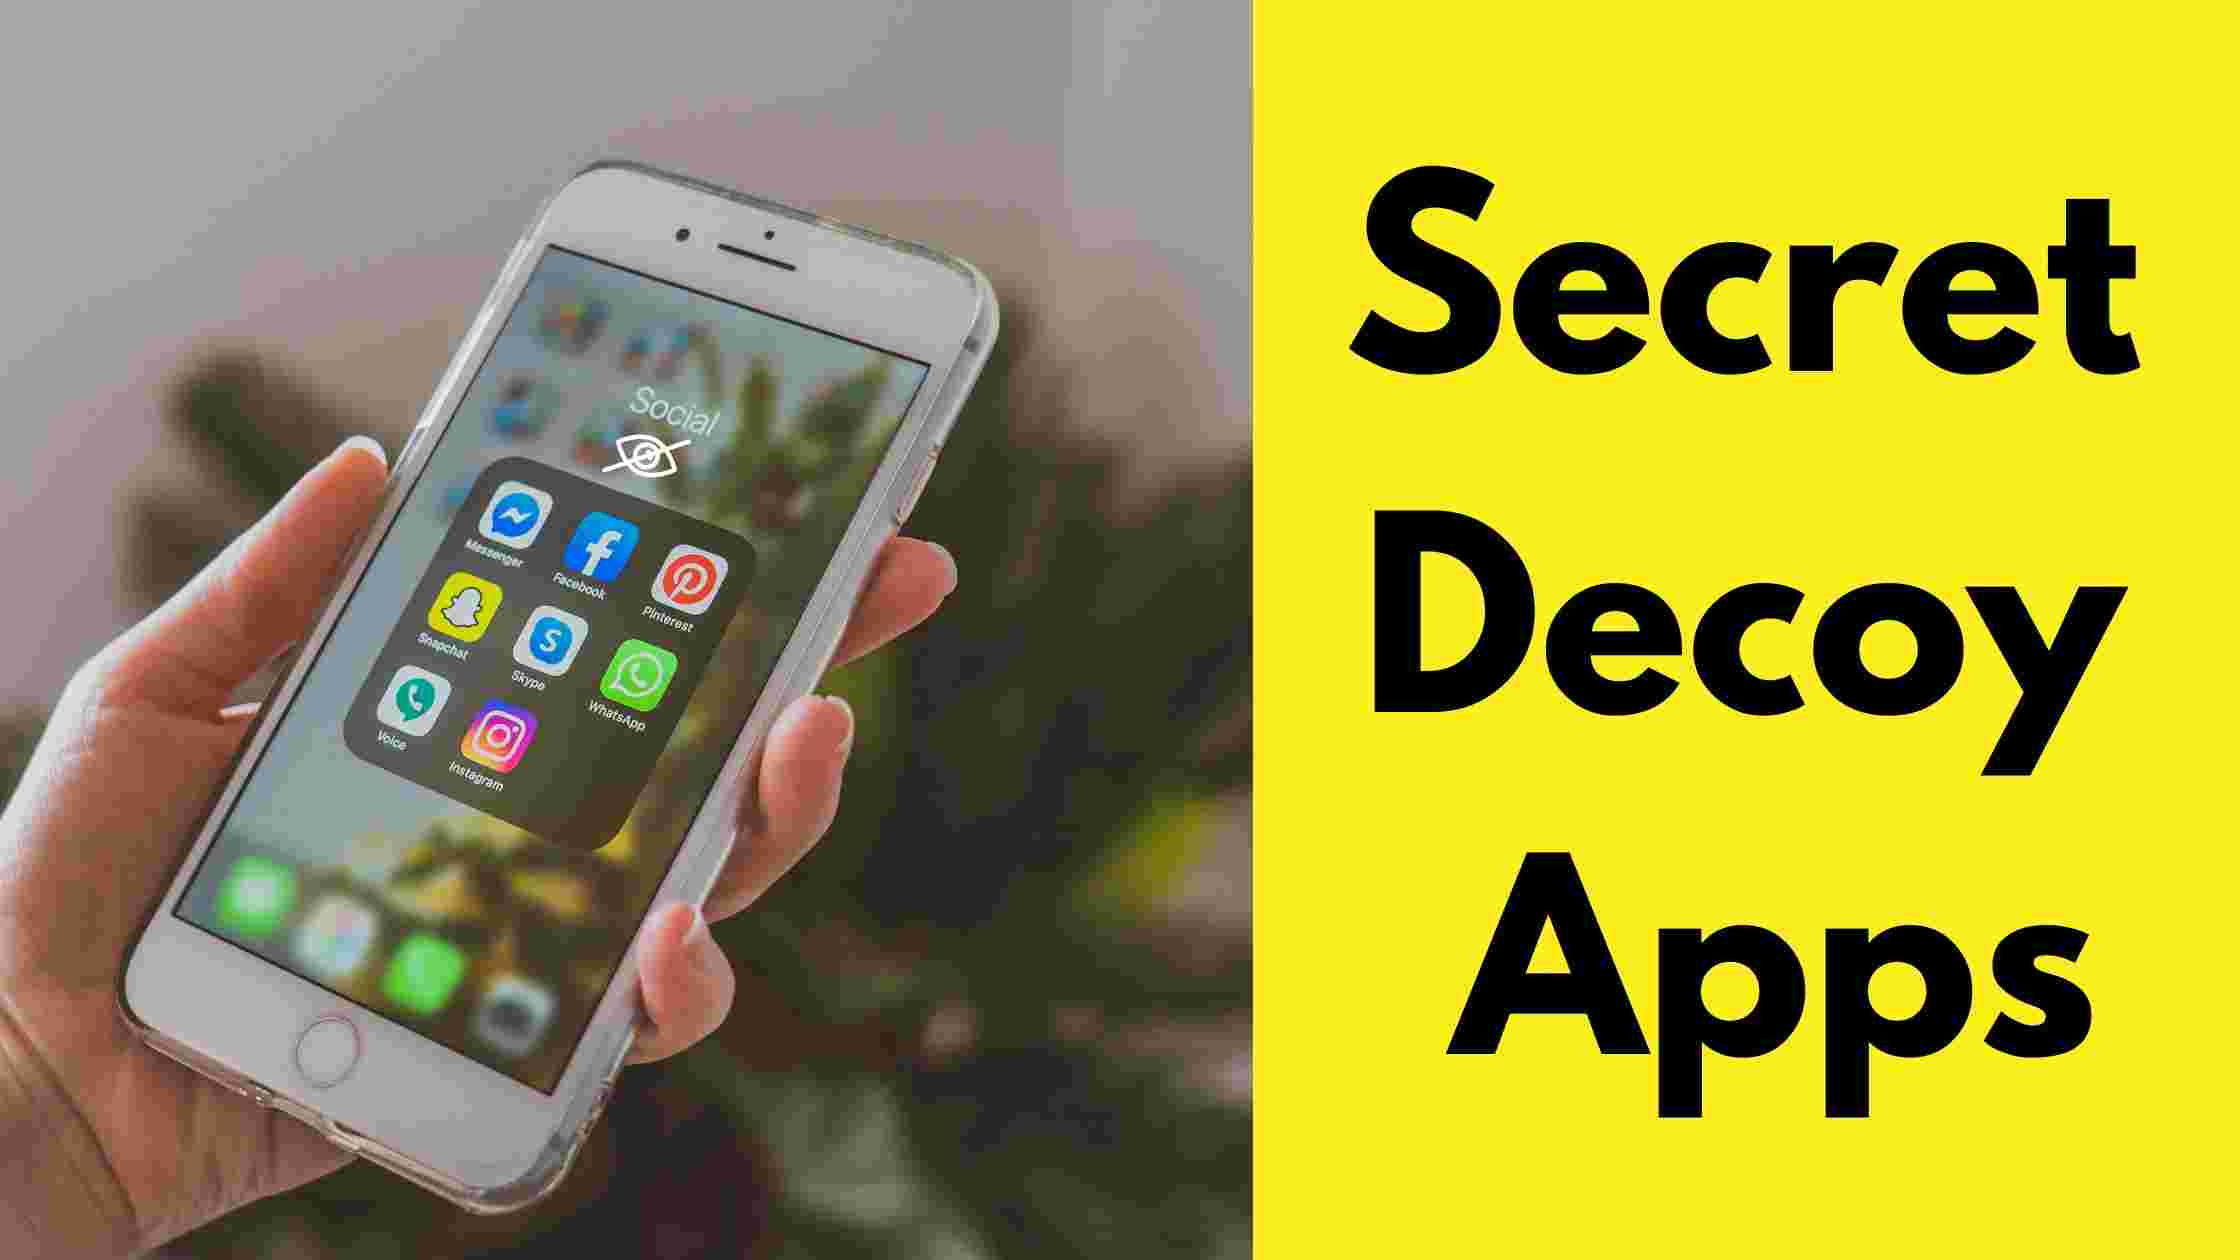 Secret Decoy Apps